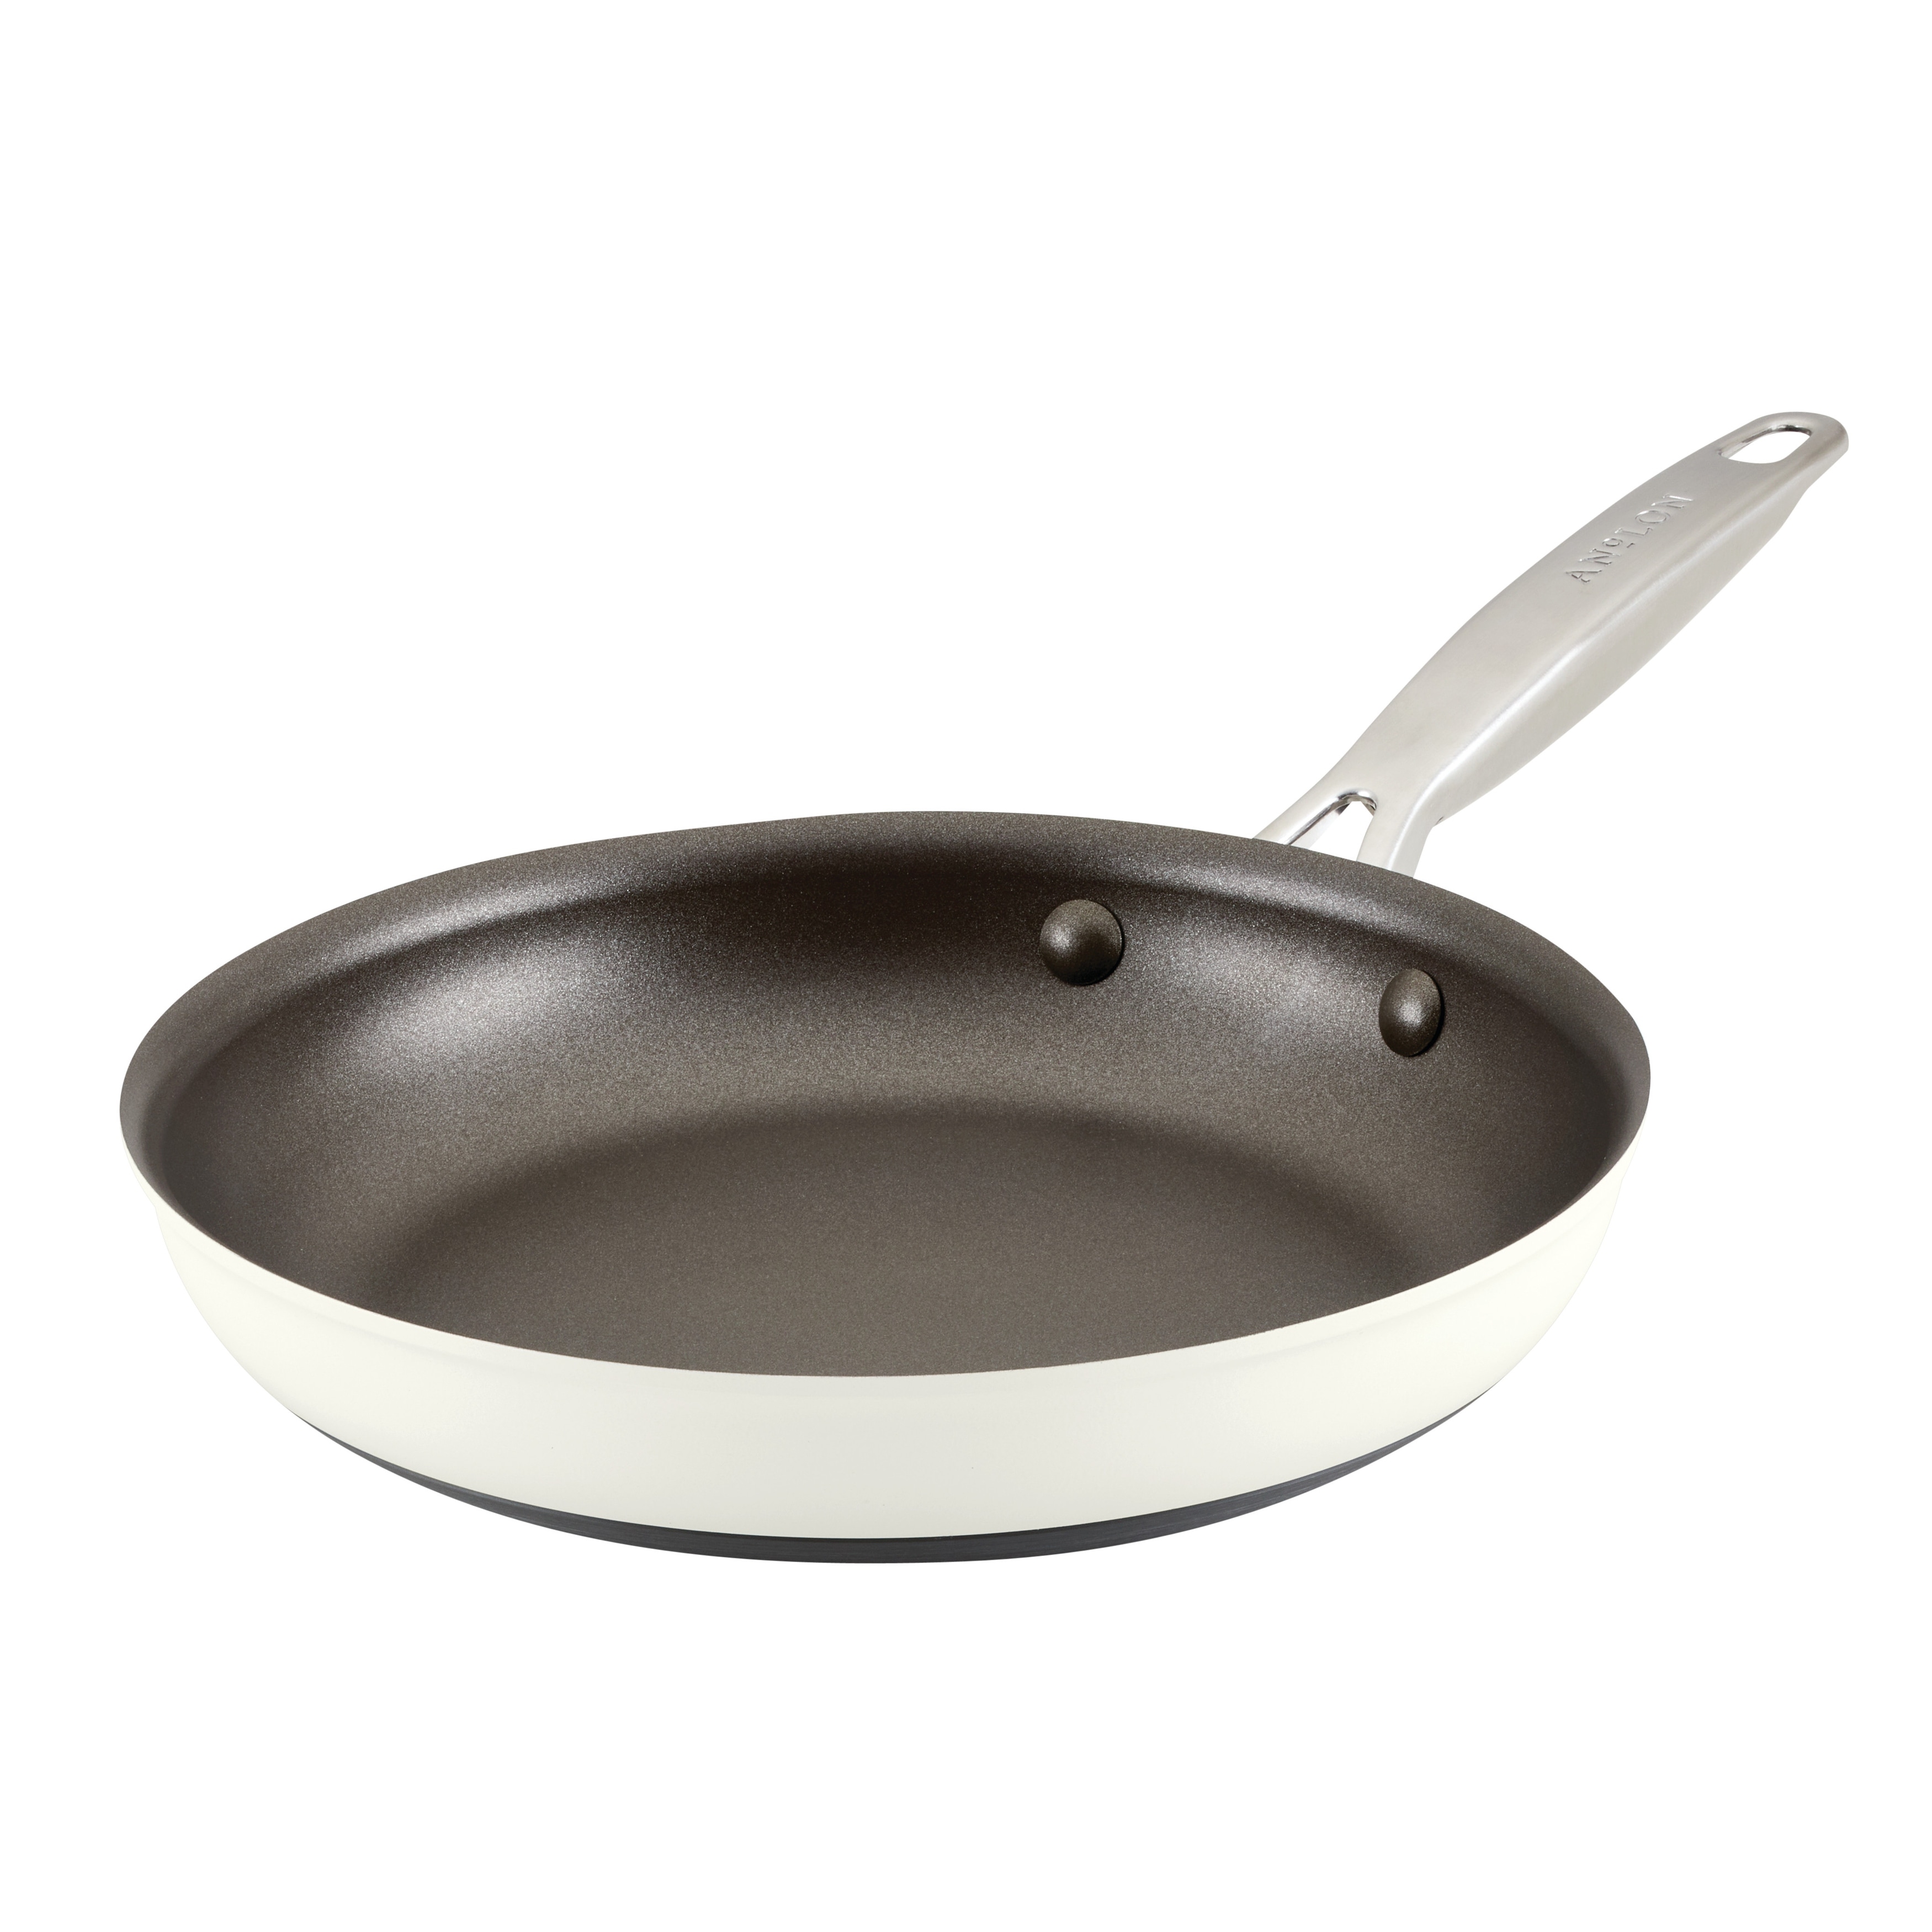 Cooks Standard Saute Pan Nonstick, Frying Pan 12-Inch Durable Heavy Du